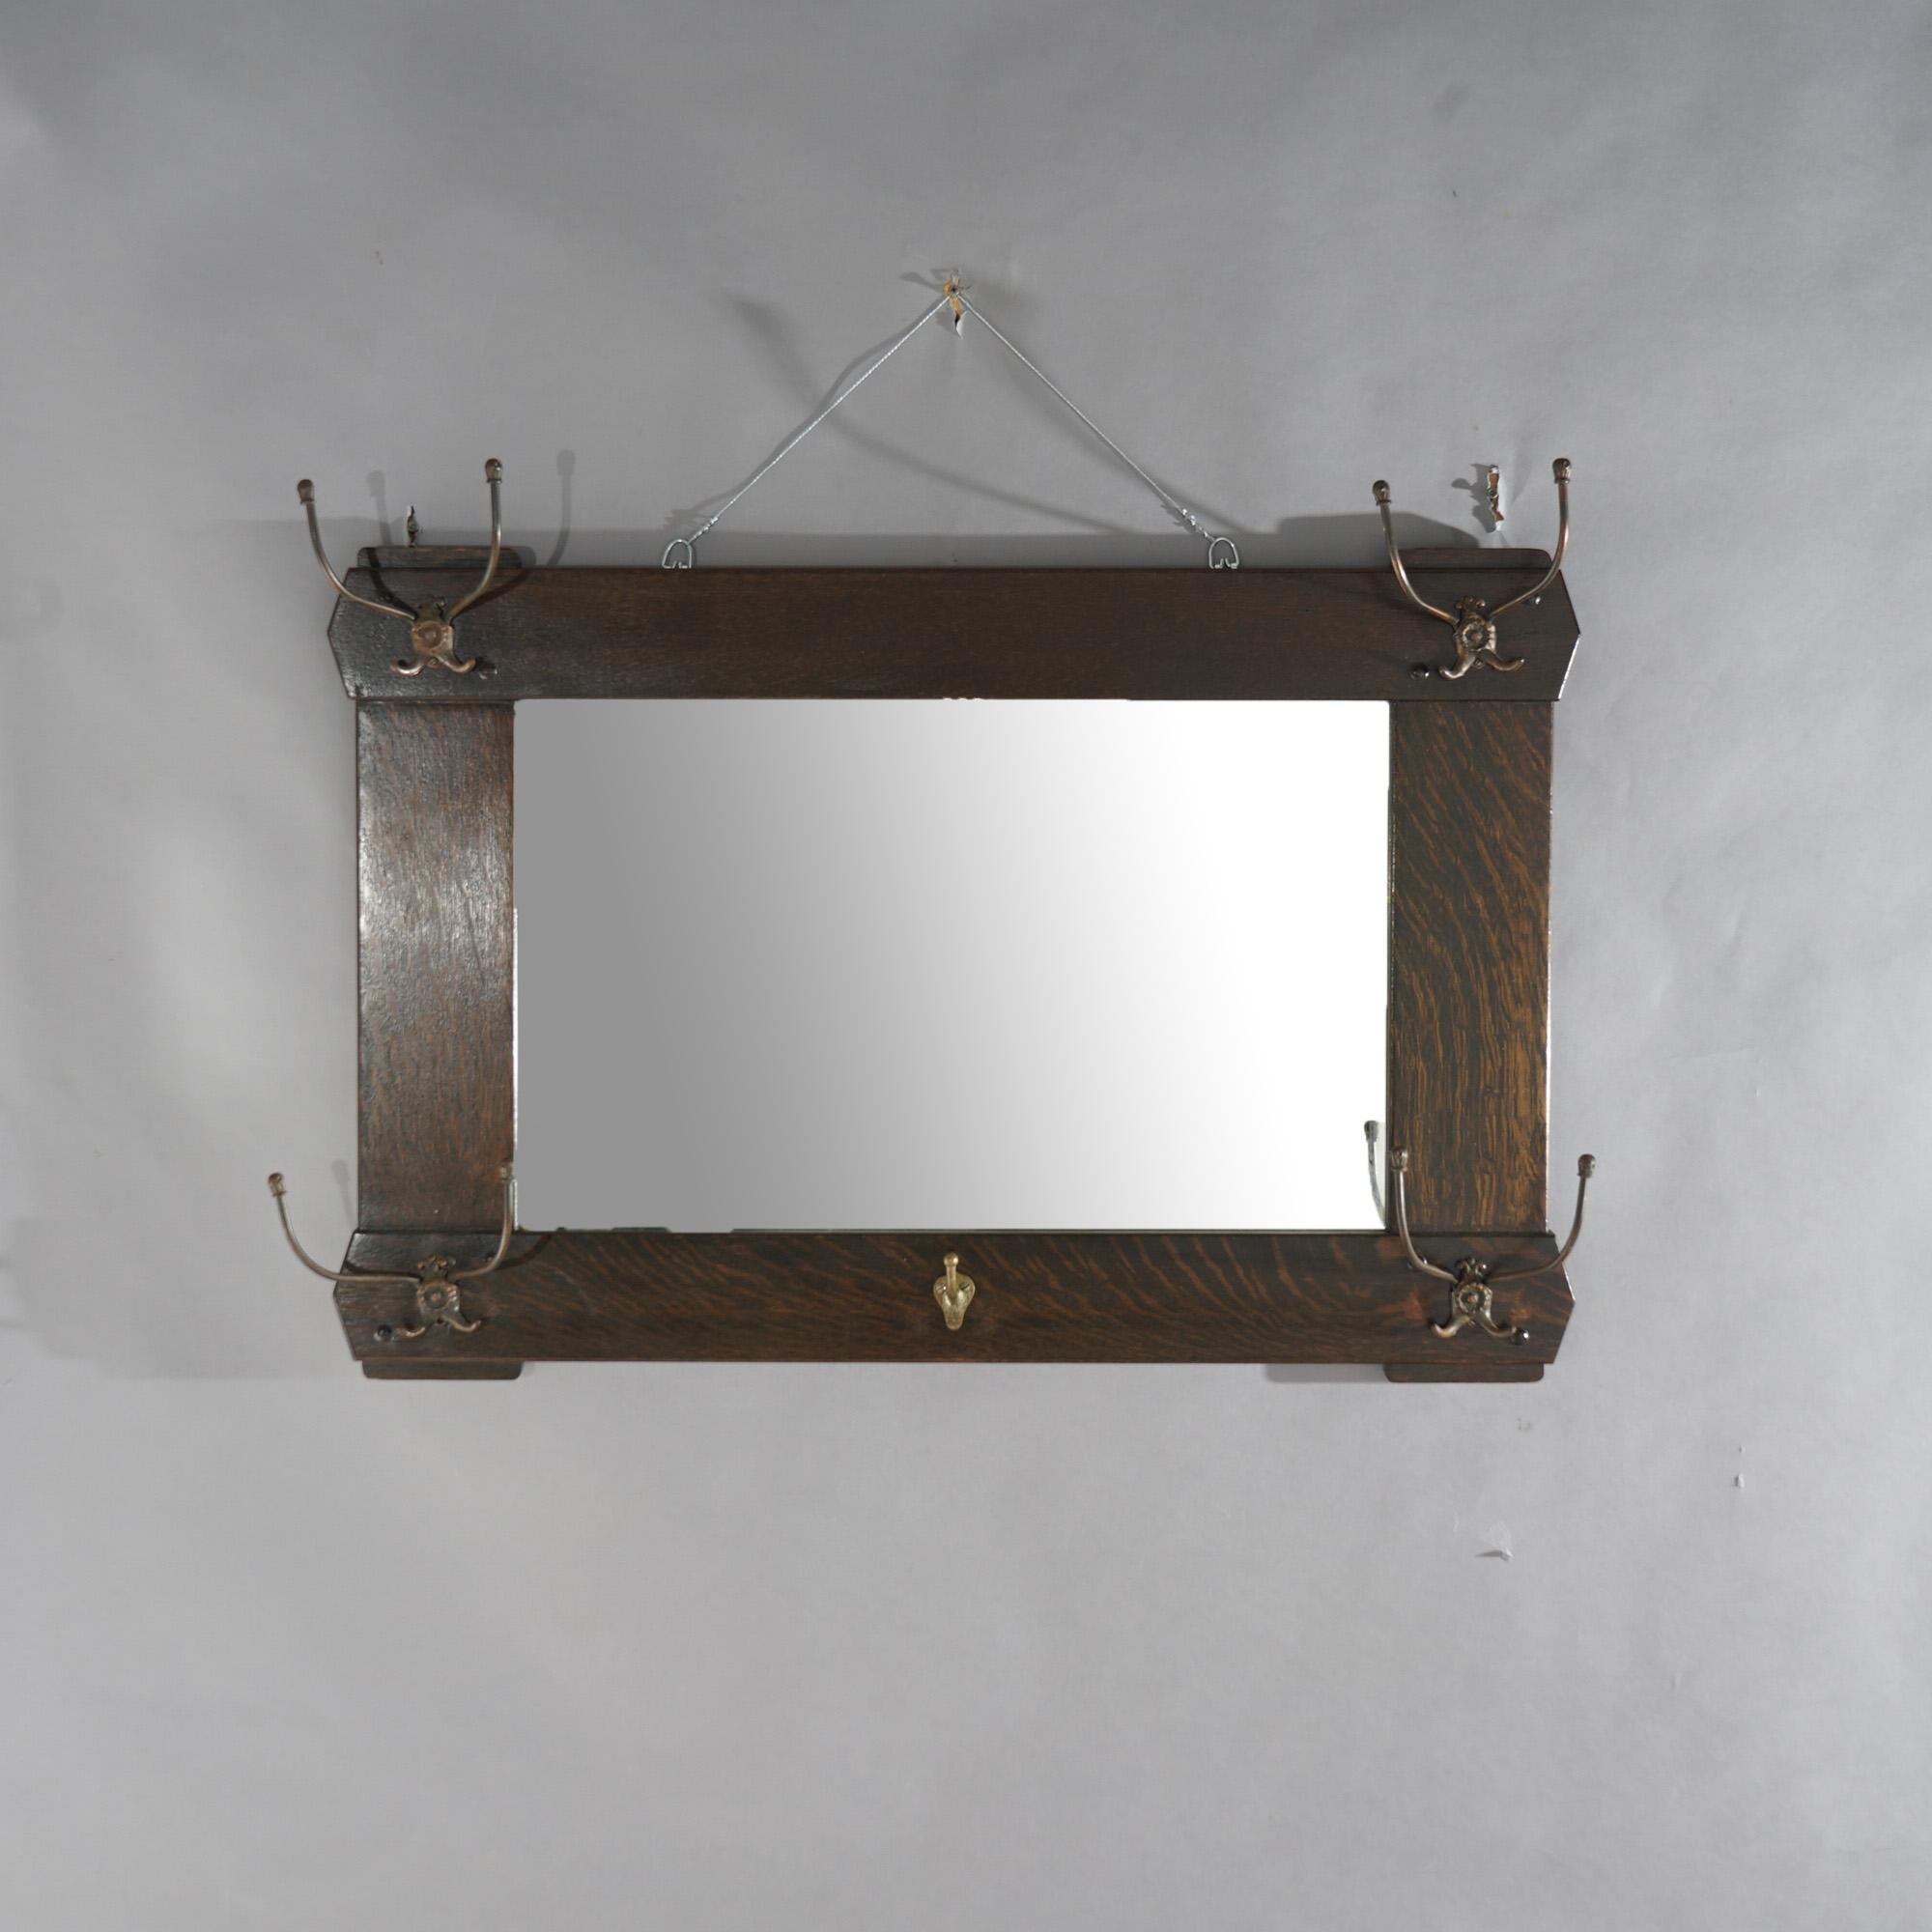 Antique Arts & Crafts Stickley Brothers School Oak Hall Mirror & Hat Hooks c1910

Measures- 24.5''H x 36.5''W x 5''D